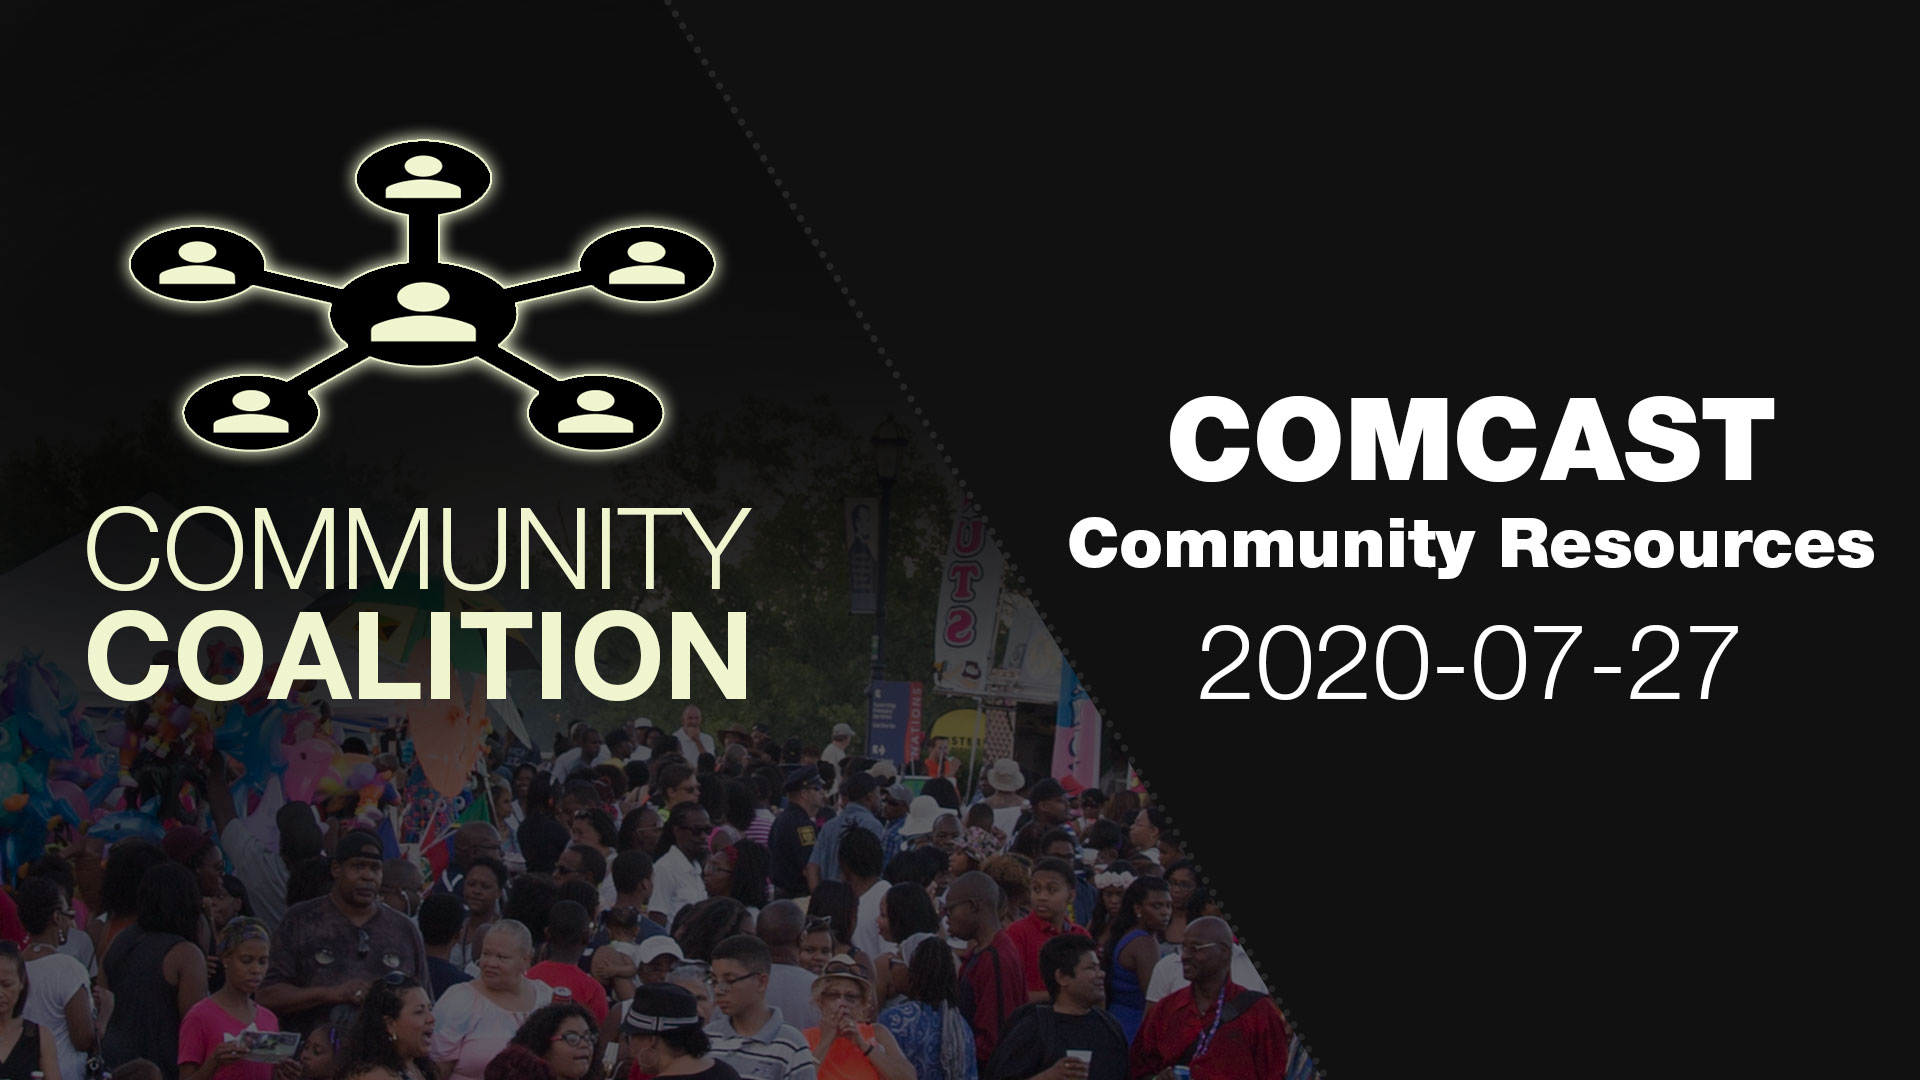 Comcast Community Resources - COMMUNITY COALITION - Virtual Zoom Segment